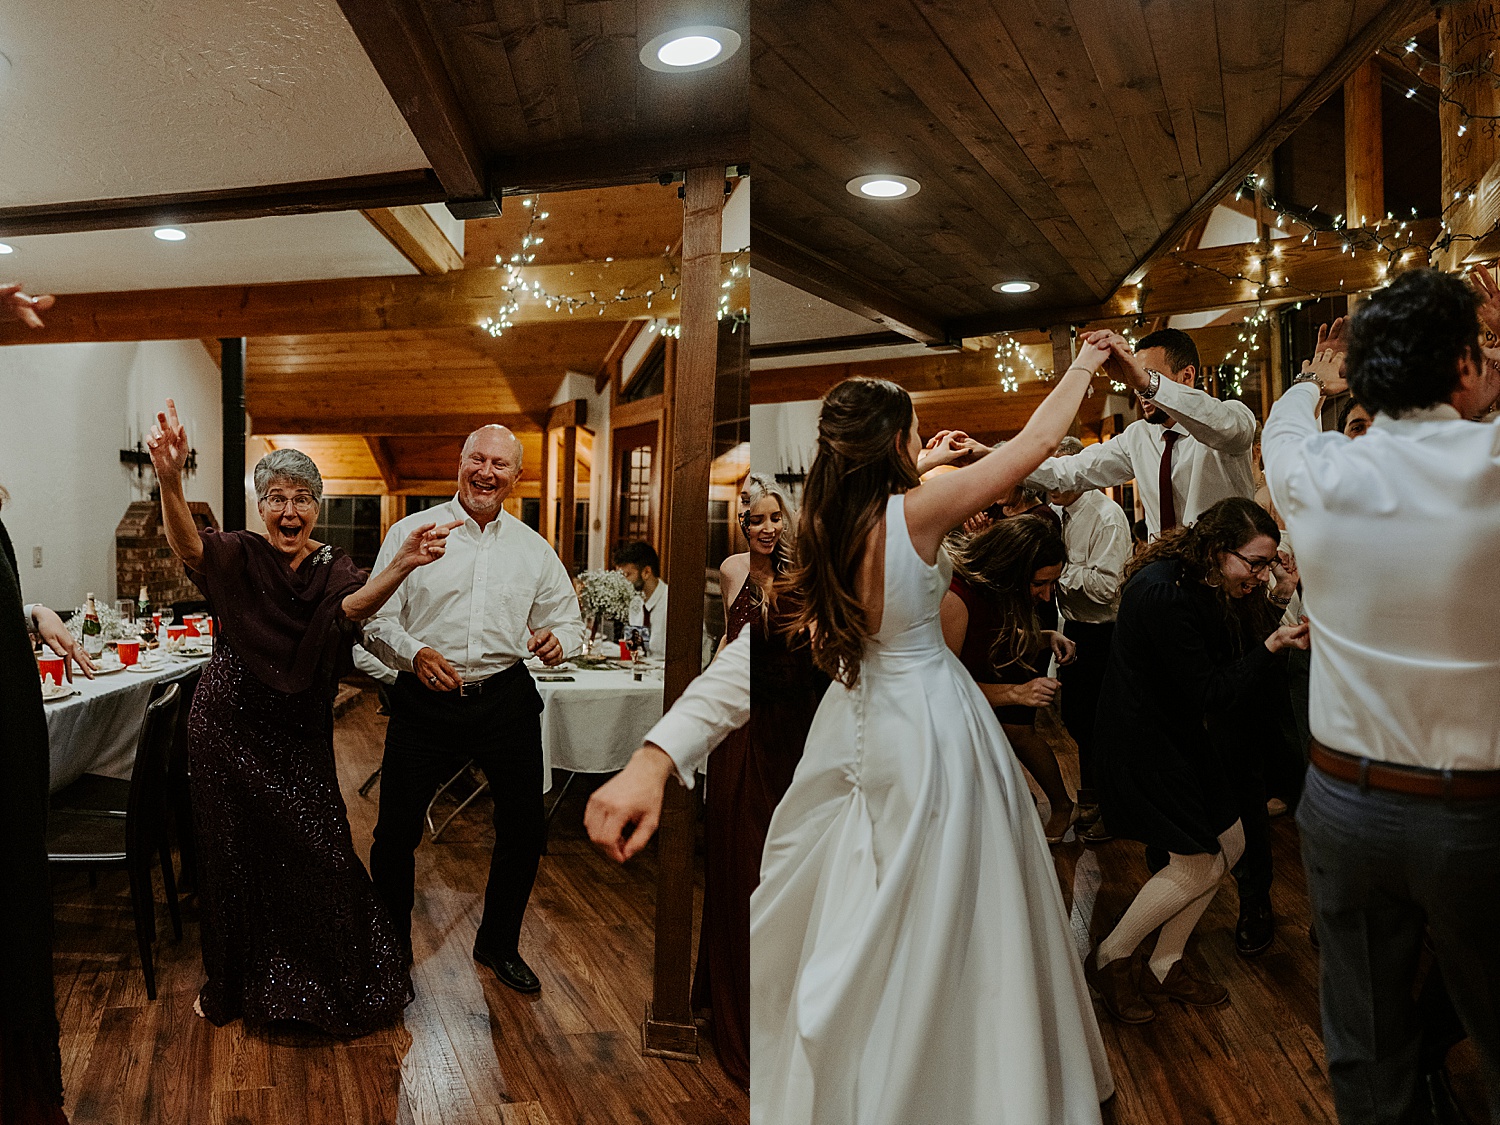 Wedding reception celebration and dancing